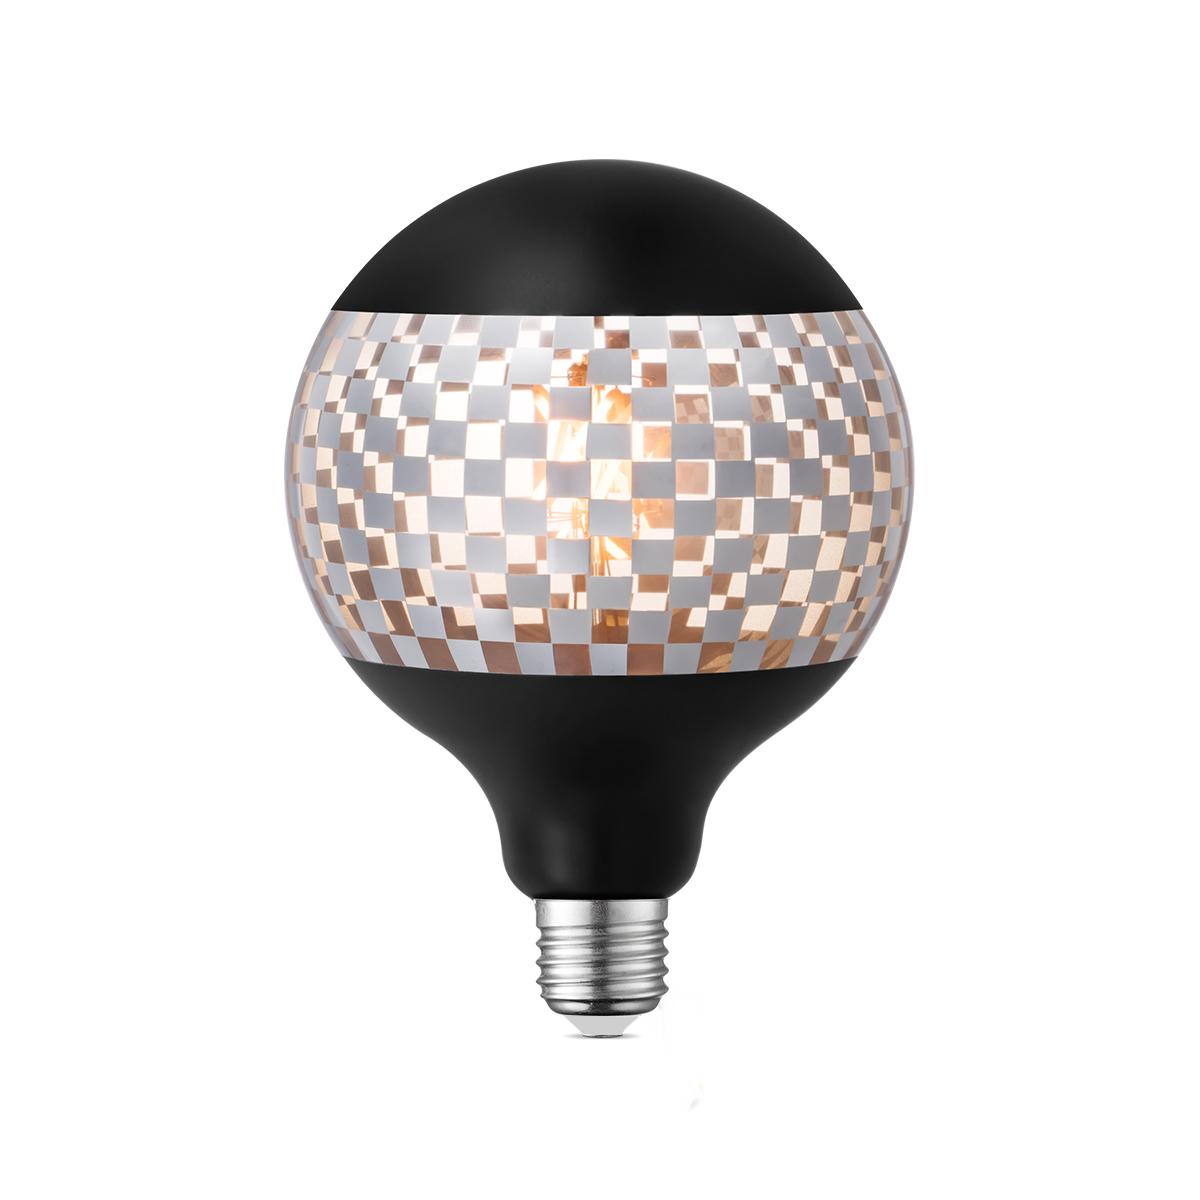 Tangla lighting - TLB-8124-04BS - LED Light Bulb Single Spiral filament - G125 4W graphic design - grid - dimmable - E27